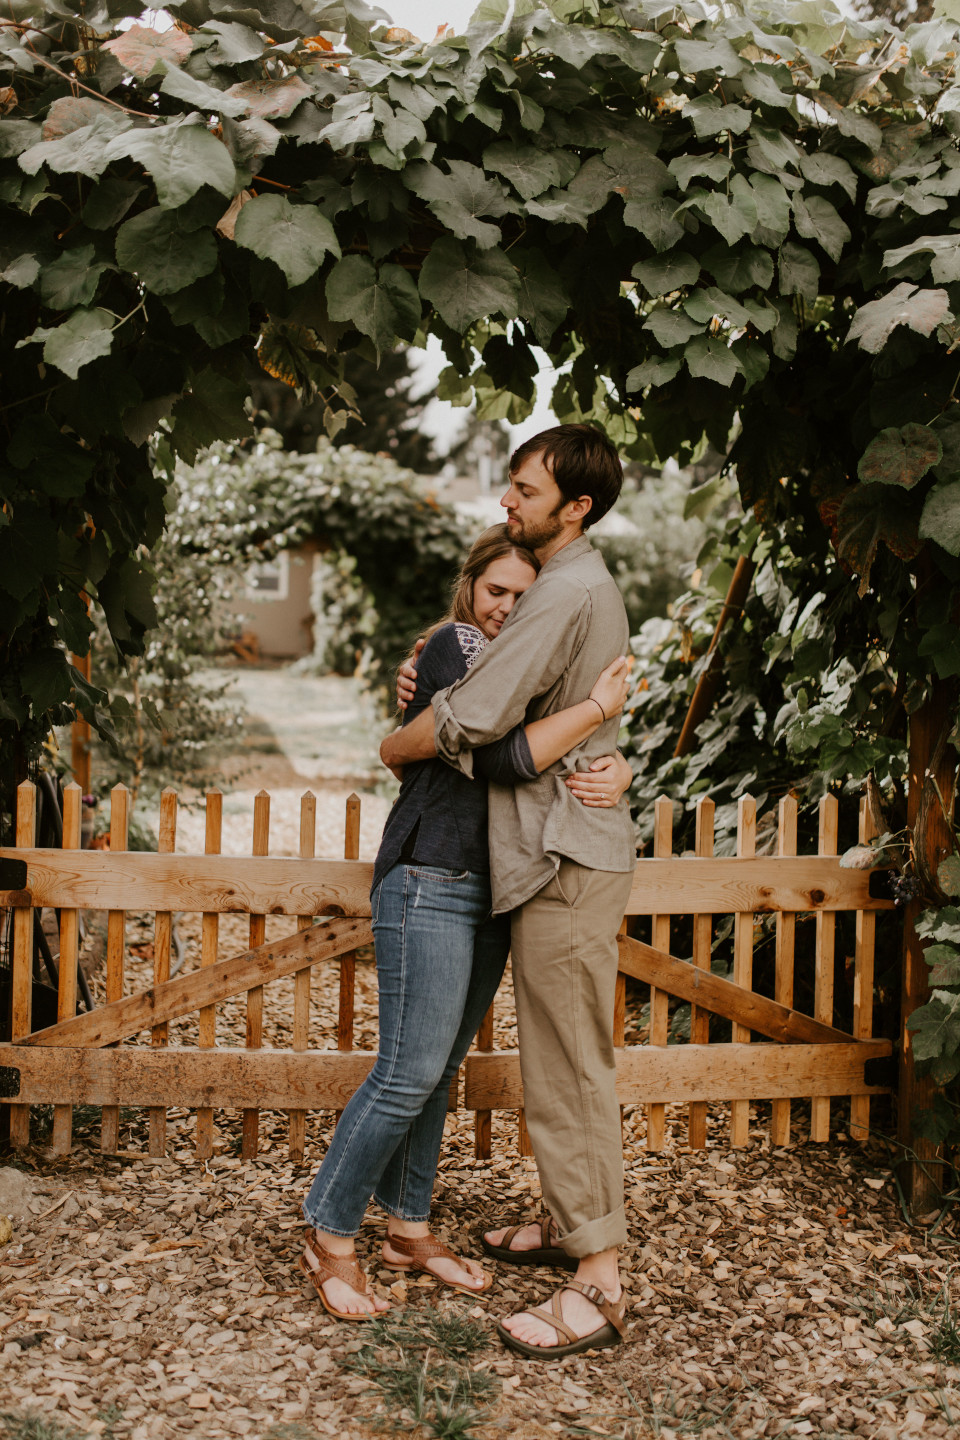 Dan and Hannah hug in Corvallis, Oregon during their Adventure. Intimate wedding photography in Corvallis Oregon by Sienna Plus Josh.